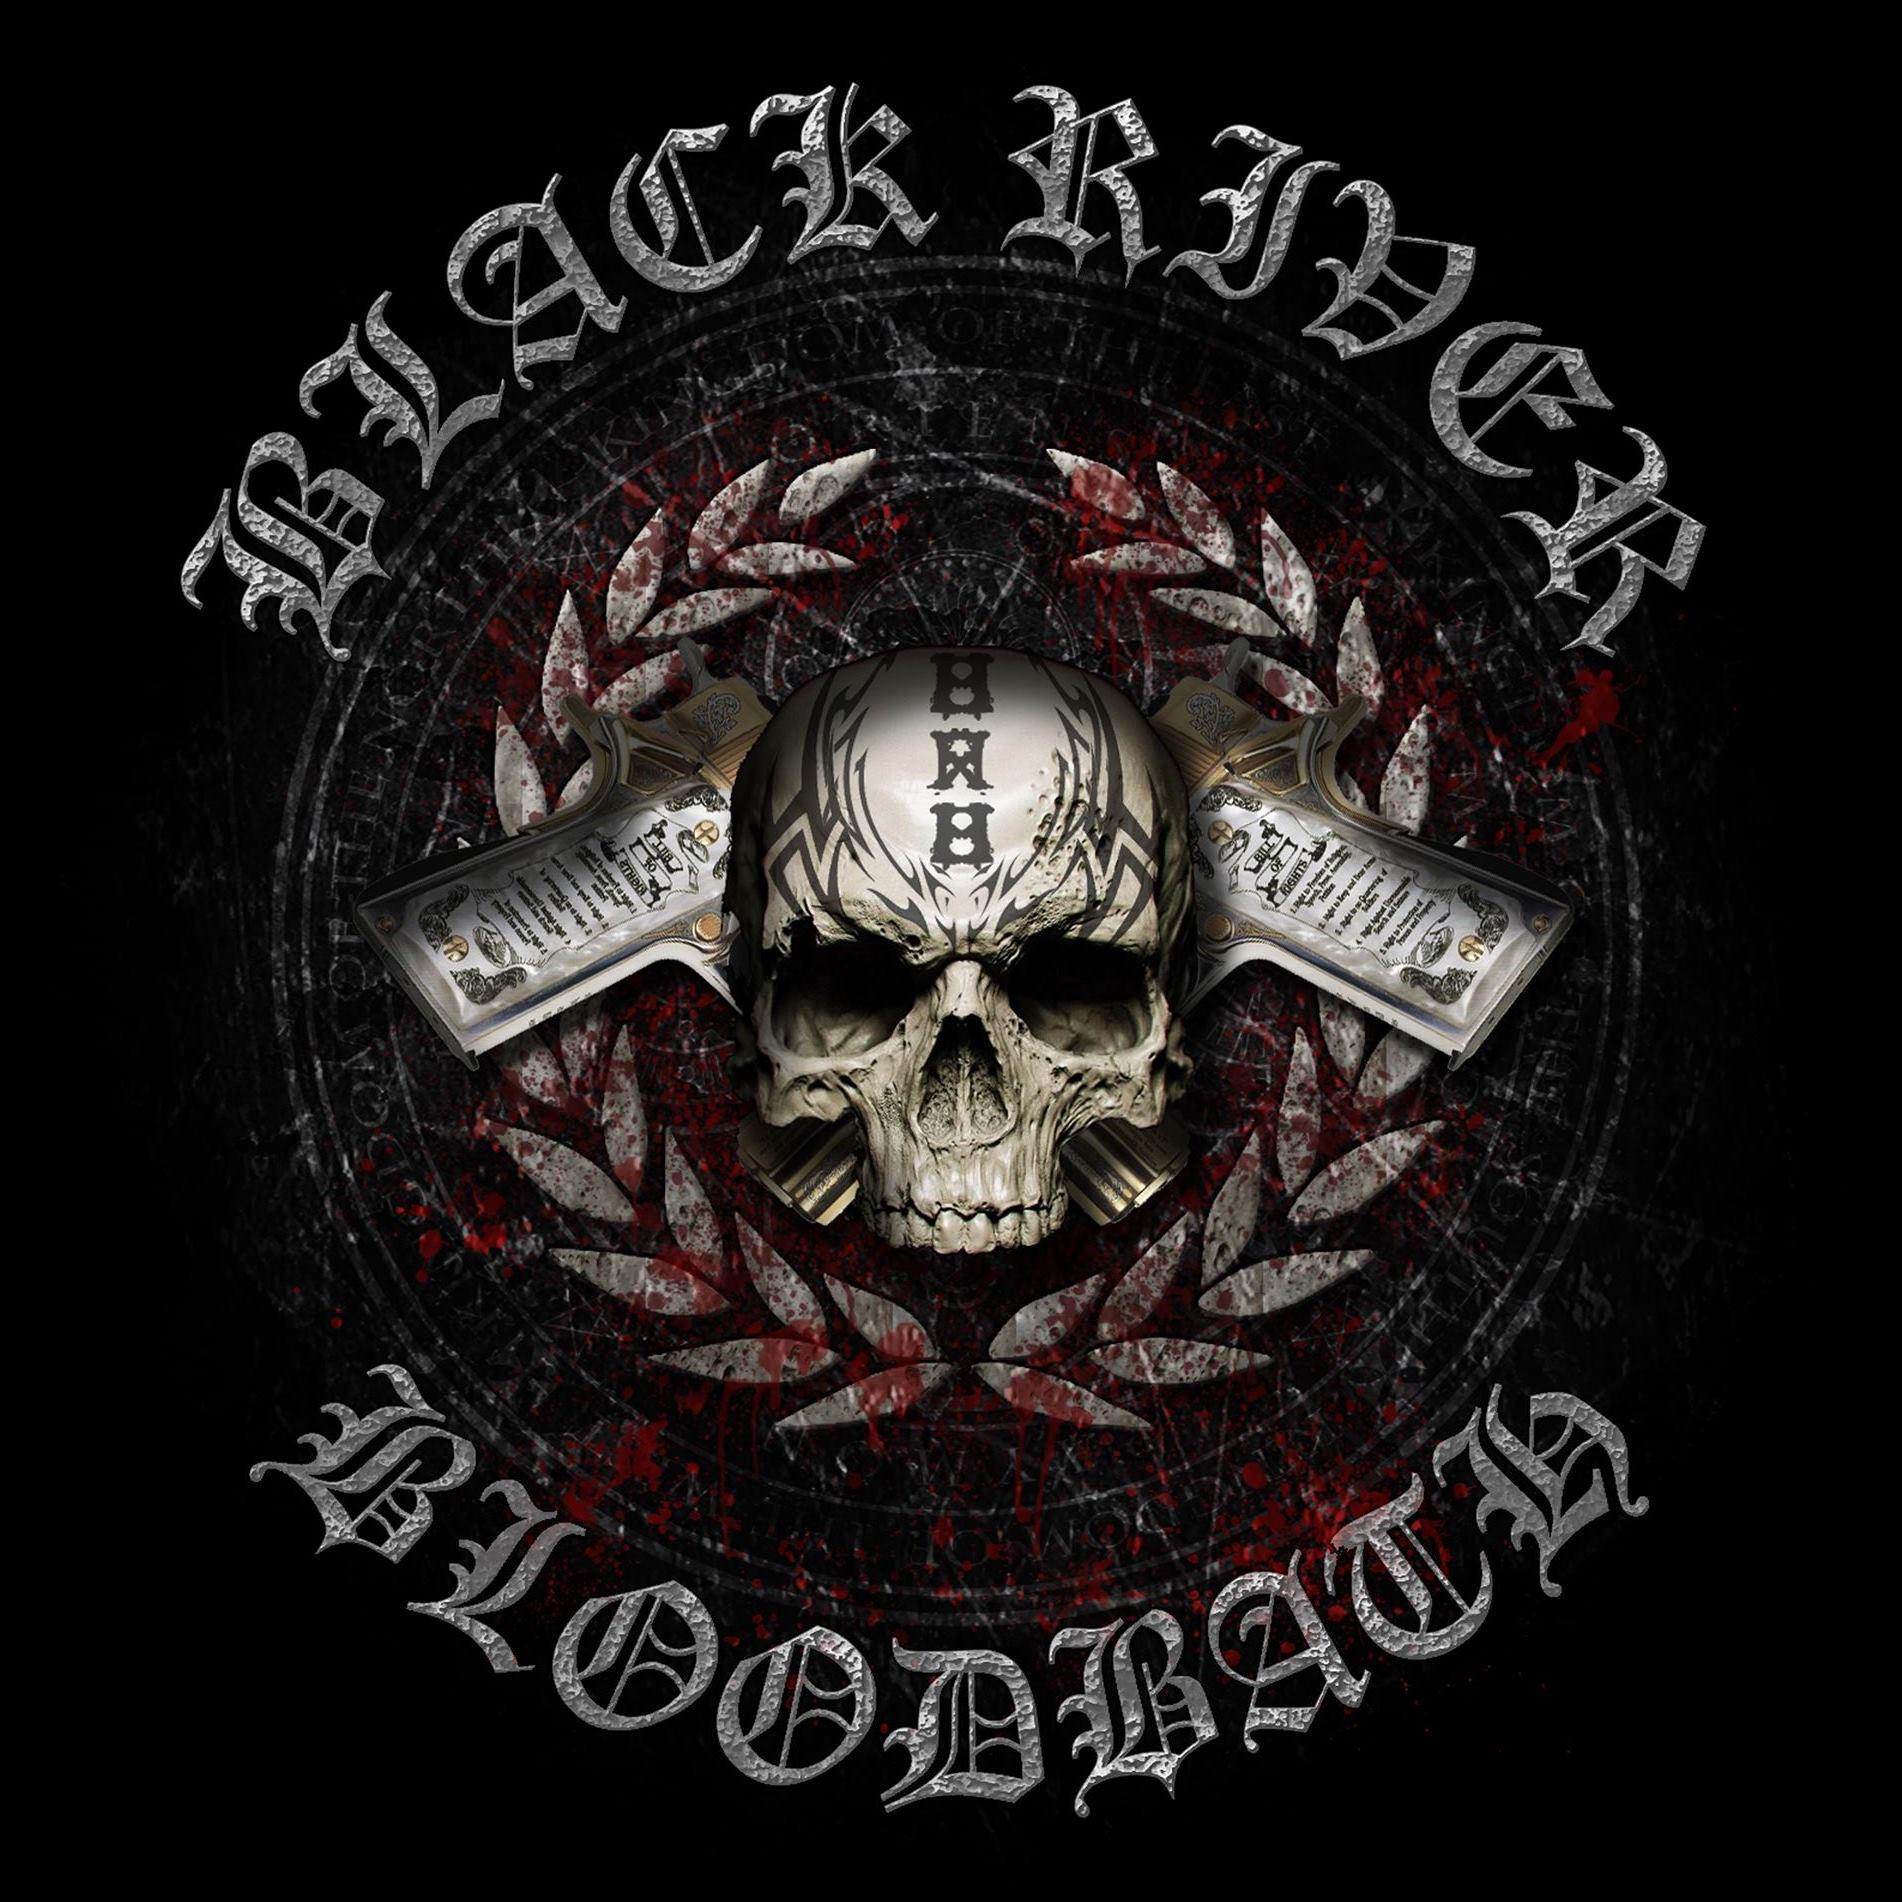 Black River Bloodbath